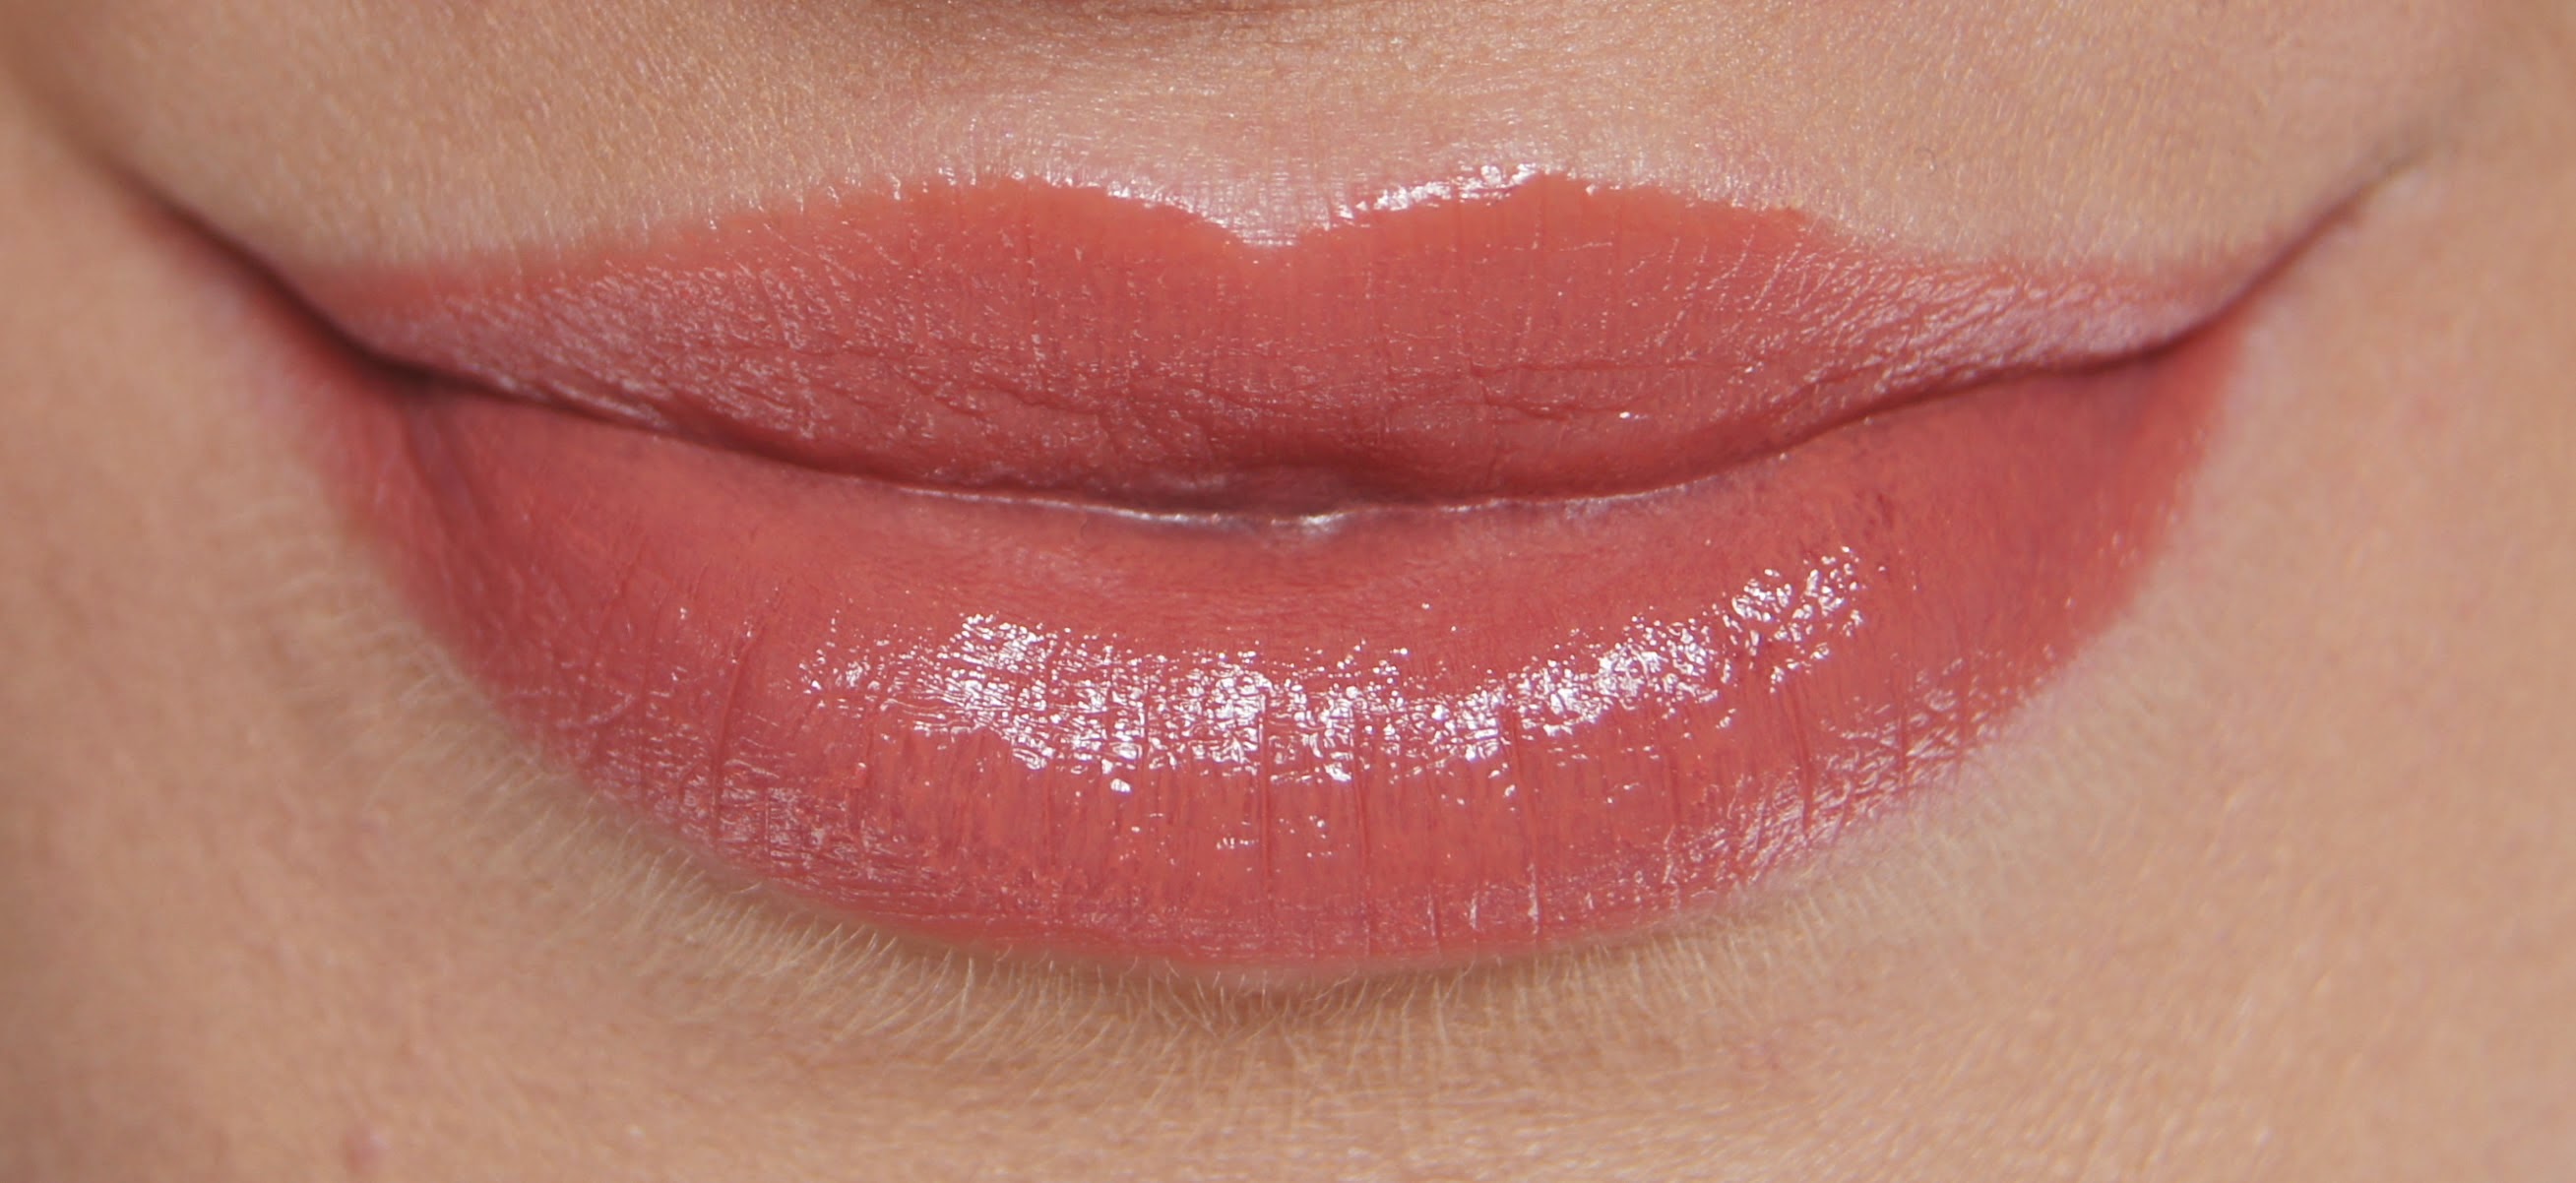 rouge dior nude lipstick lip blush 169 grege swatch